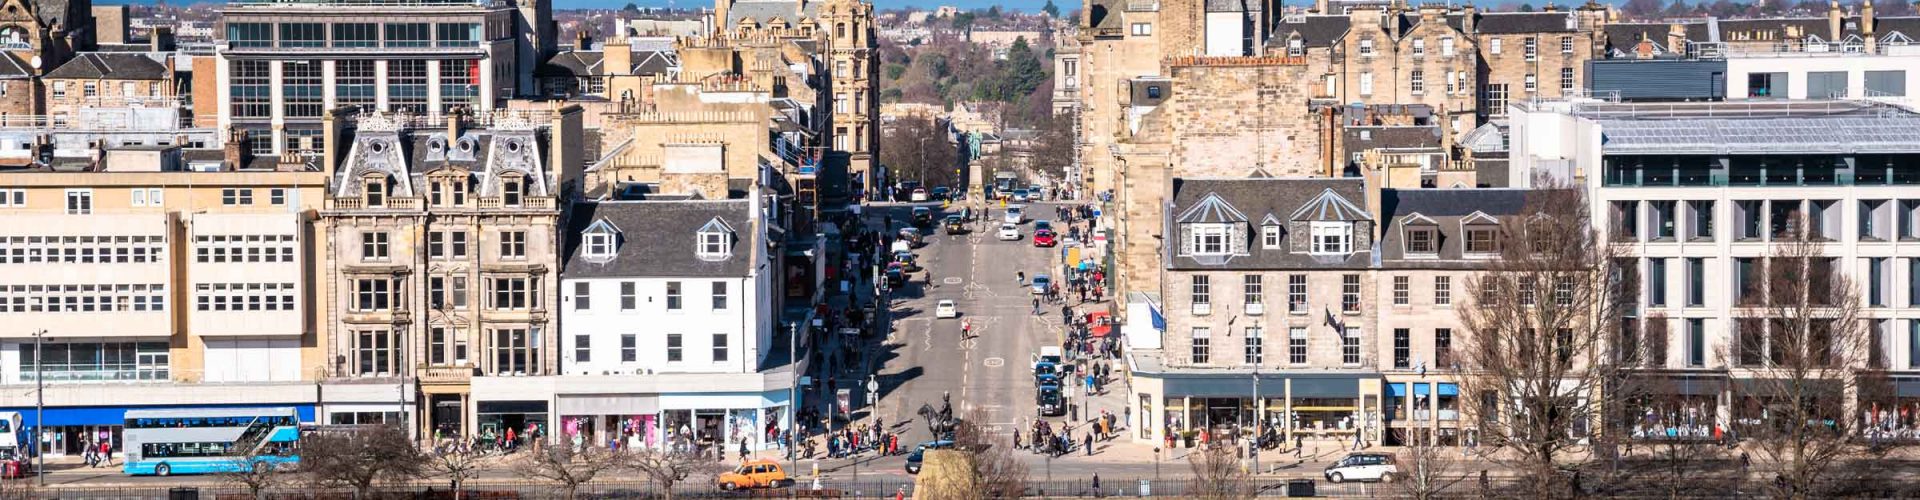 View of Princes Street in Edinburgh